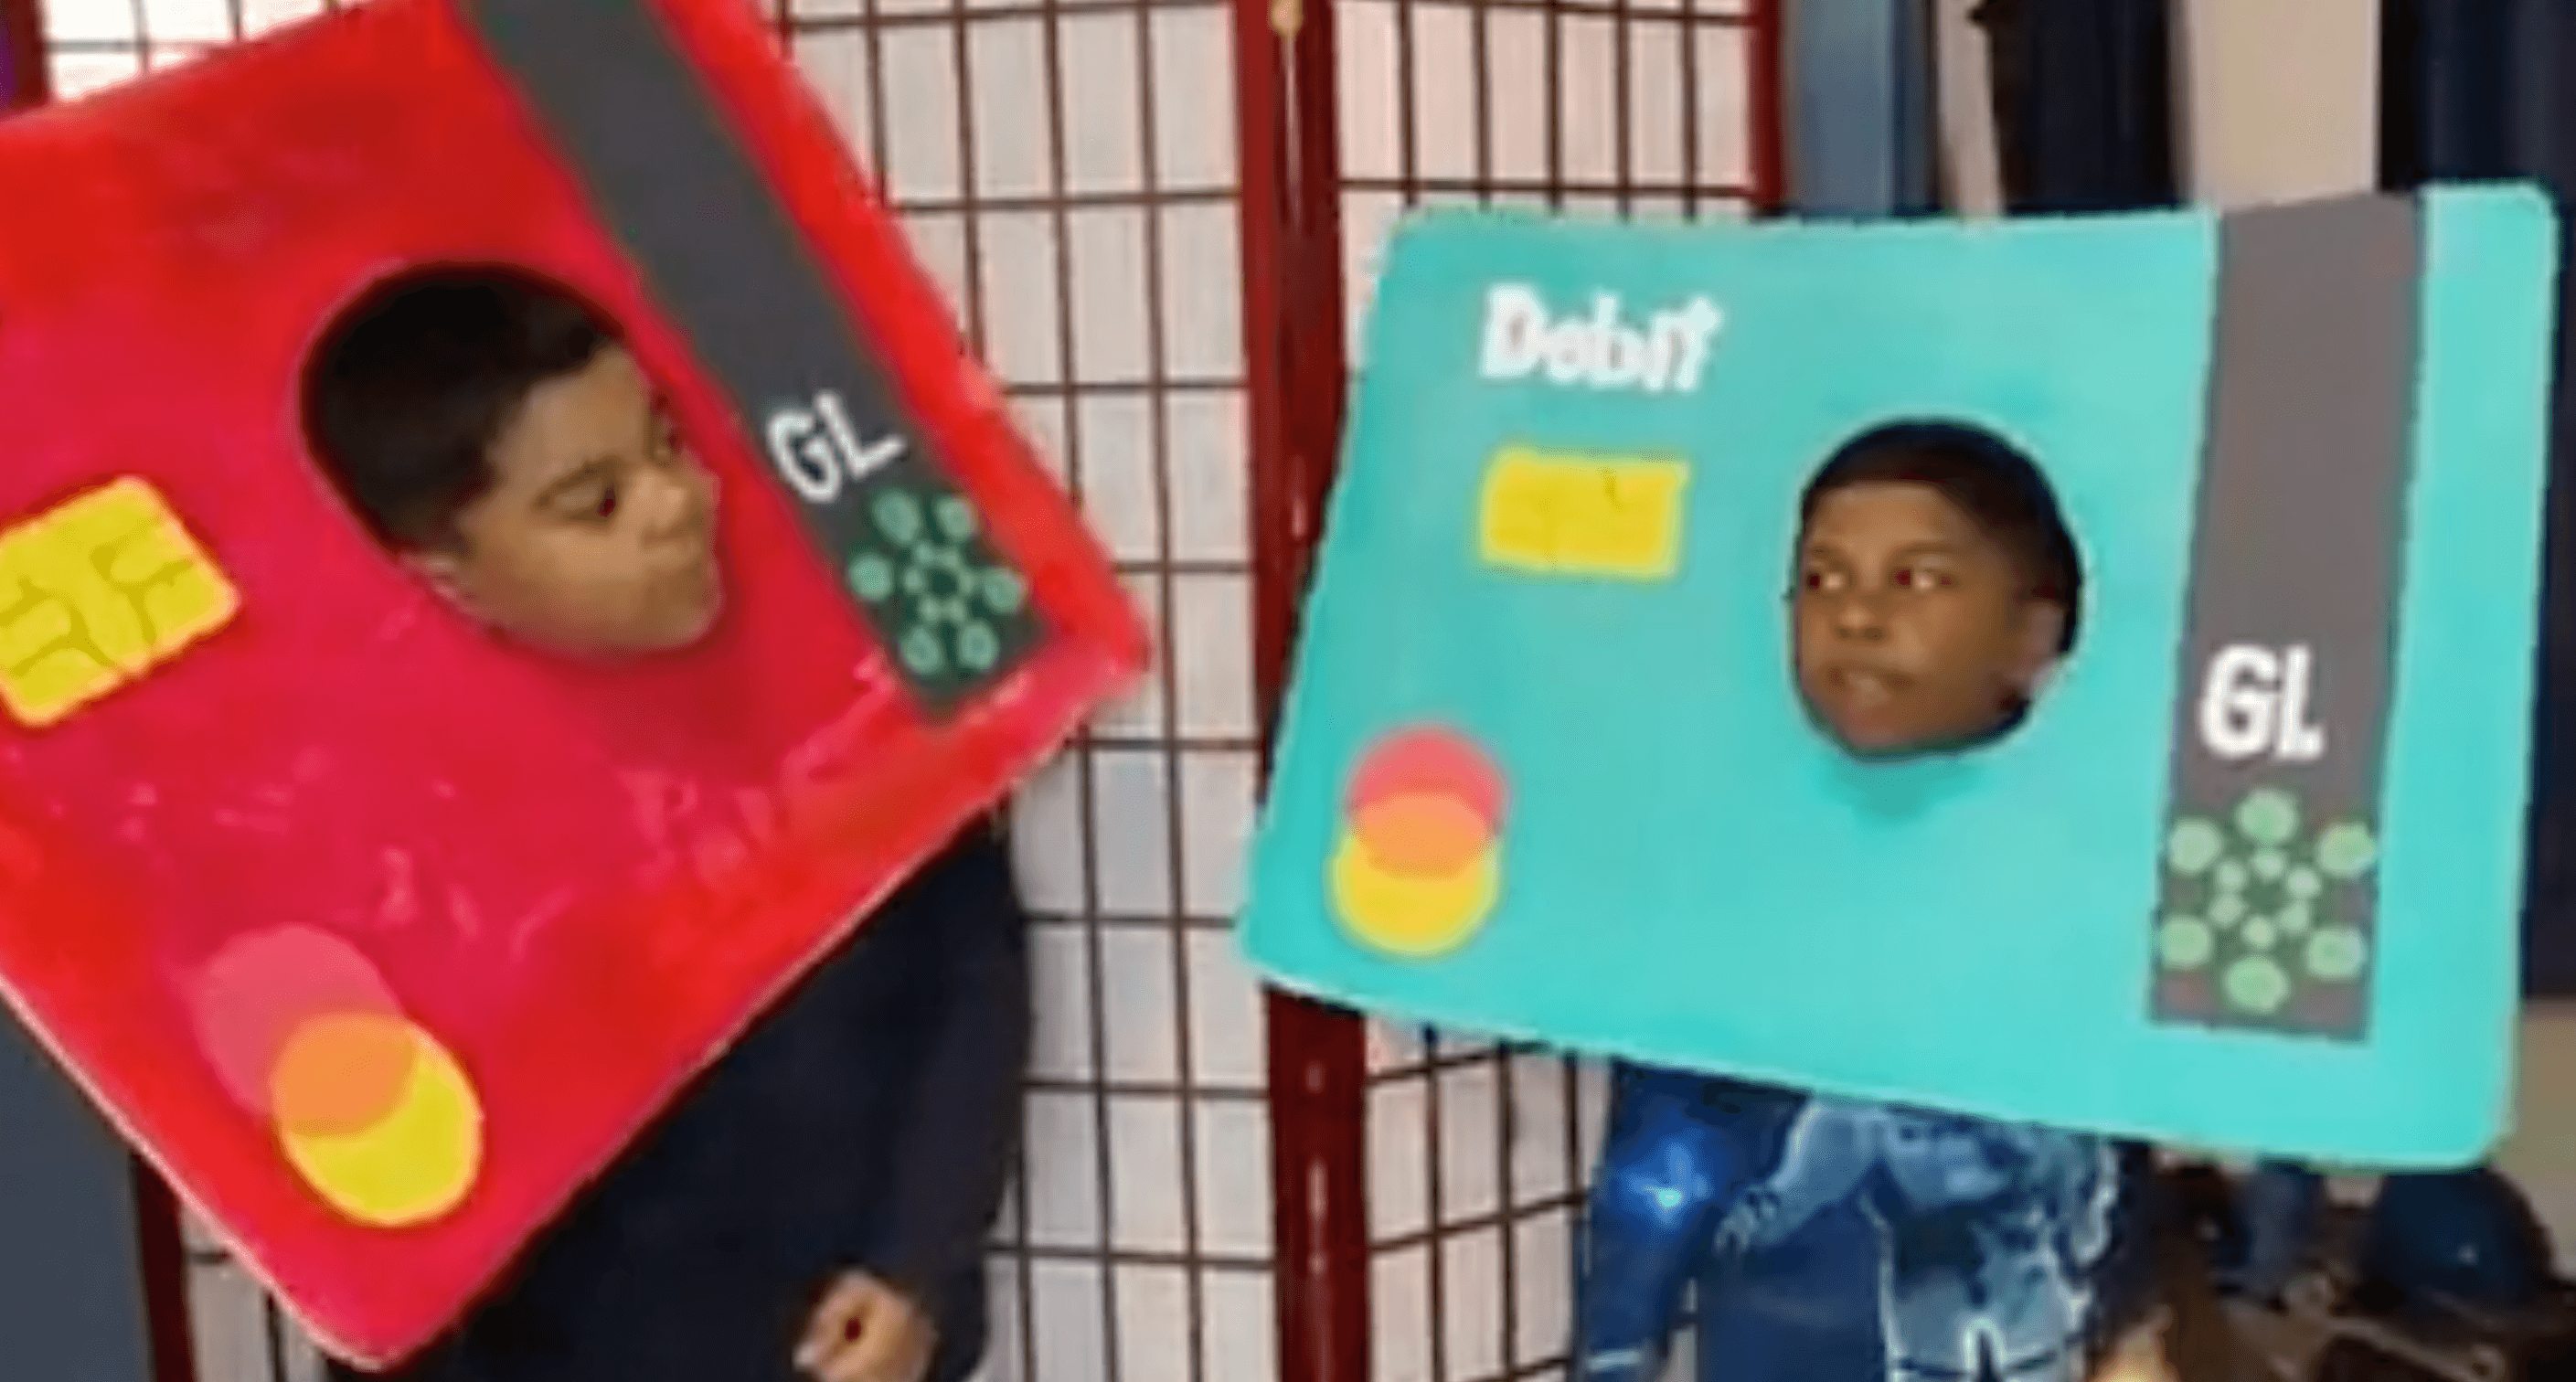 boys dressed up as greenlight debit cards